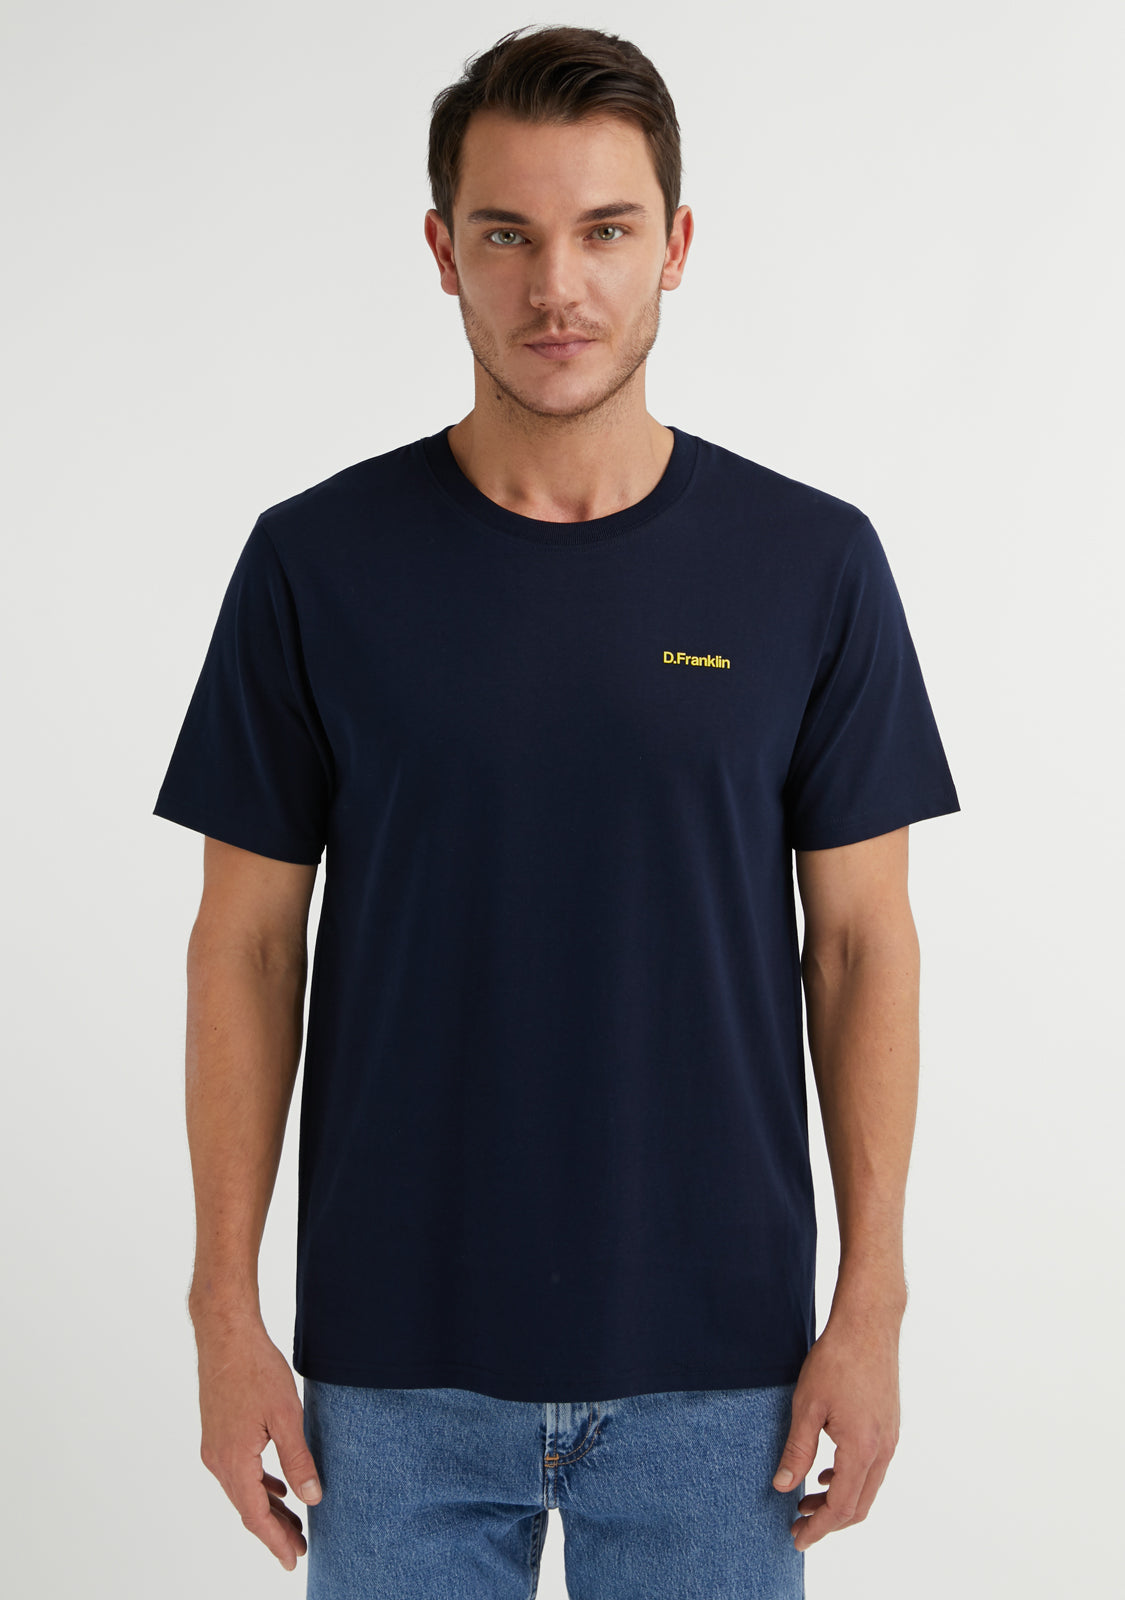 Basic Logo T-Shirt Navy / Yellow